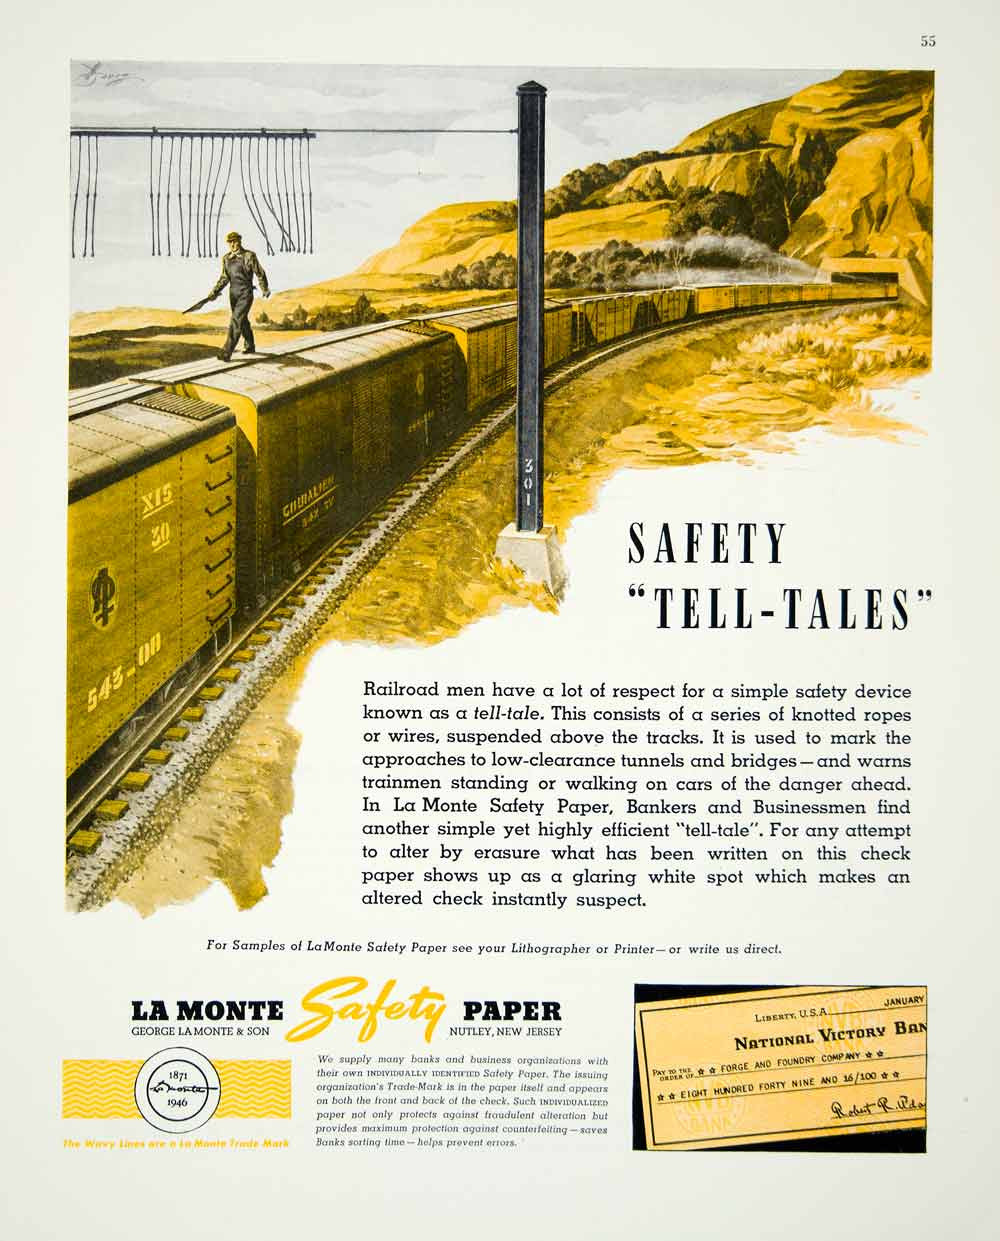 1946 Ad George La Monte Son Safety Papers Train Railroad Tracks Landscape FTM1 - Period Paper
